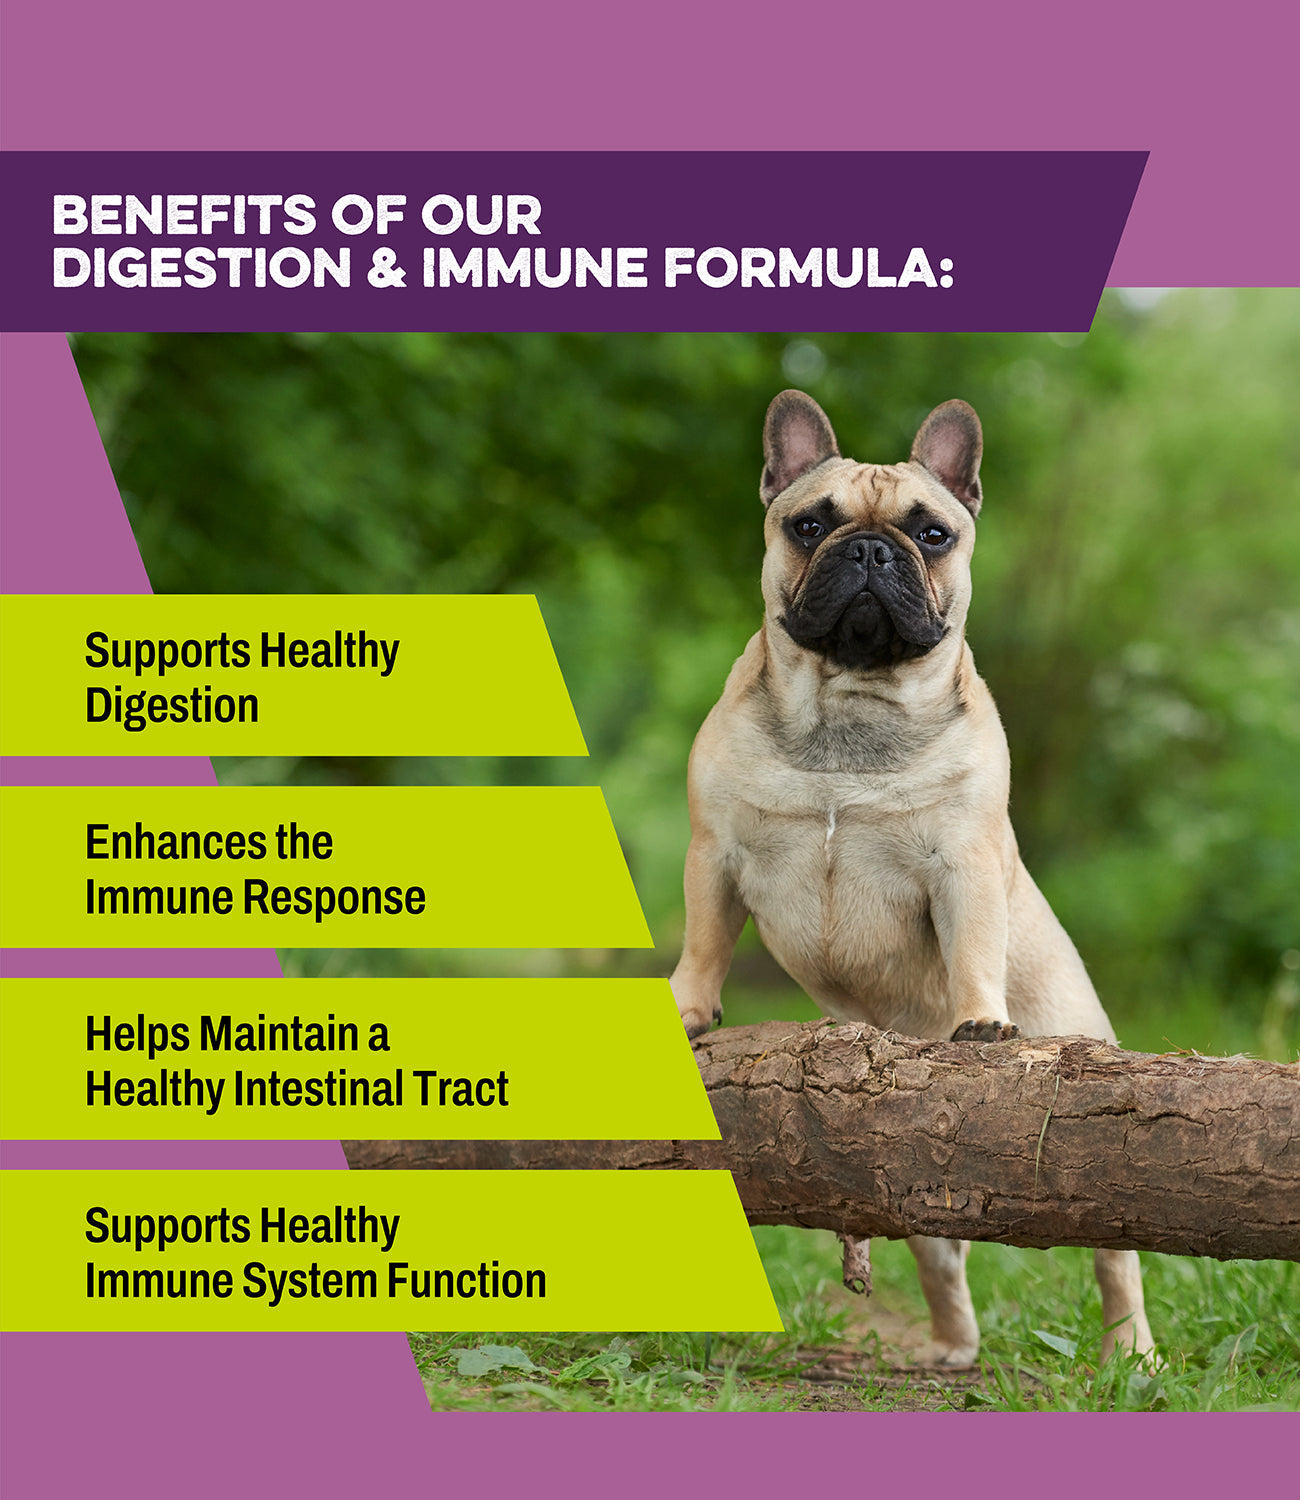 Digestion / Immune Dog Supplement - includes Probiotics, Prebiotics, & Postbiotics